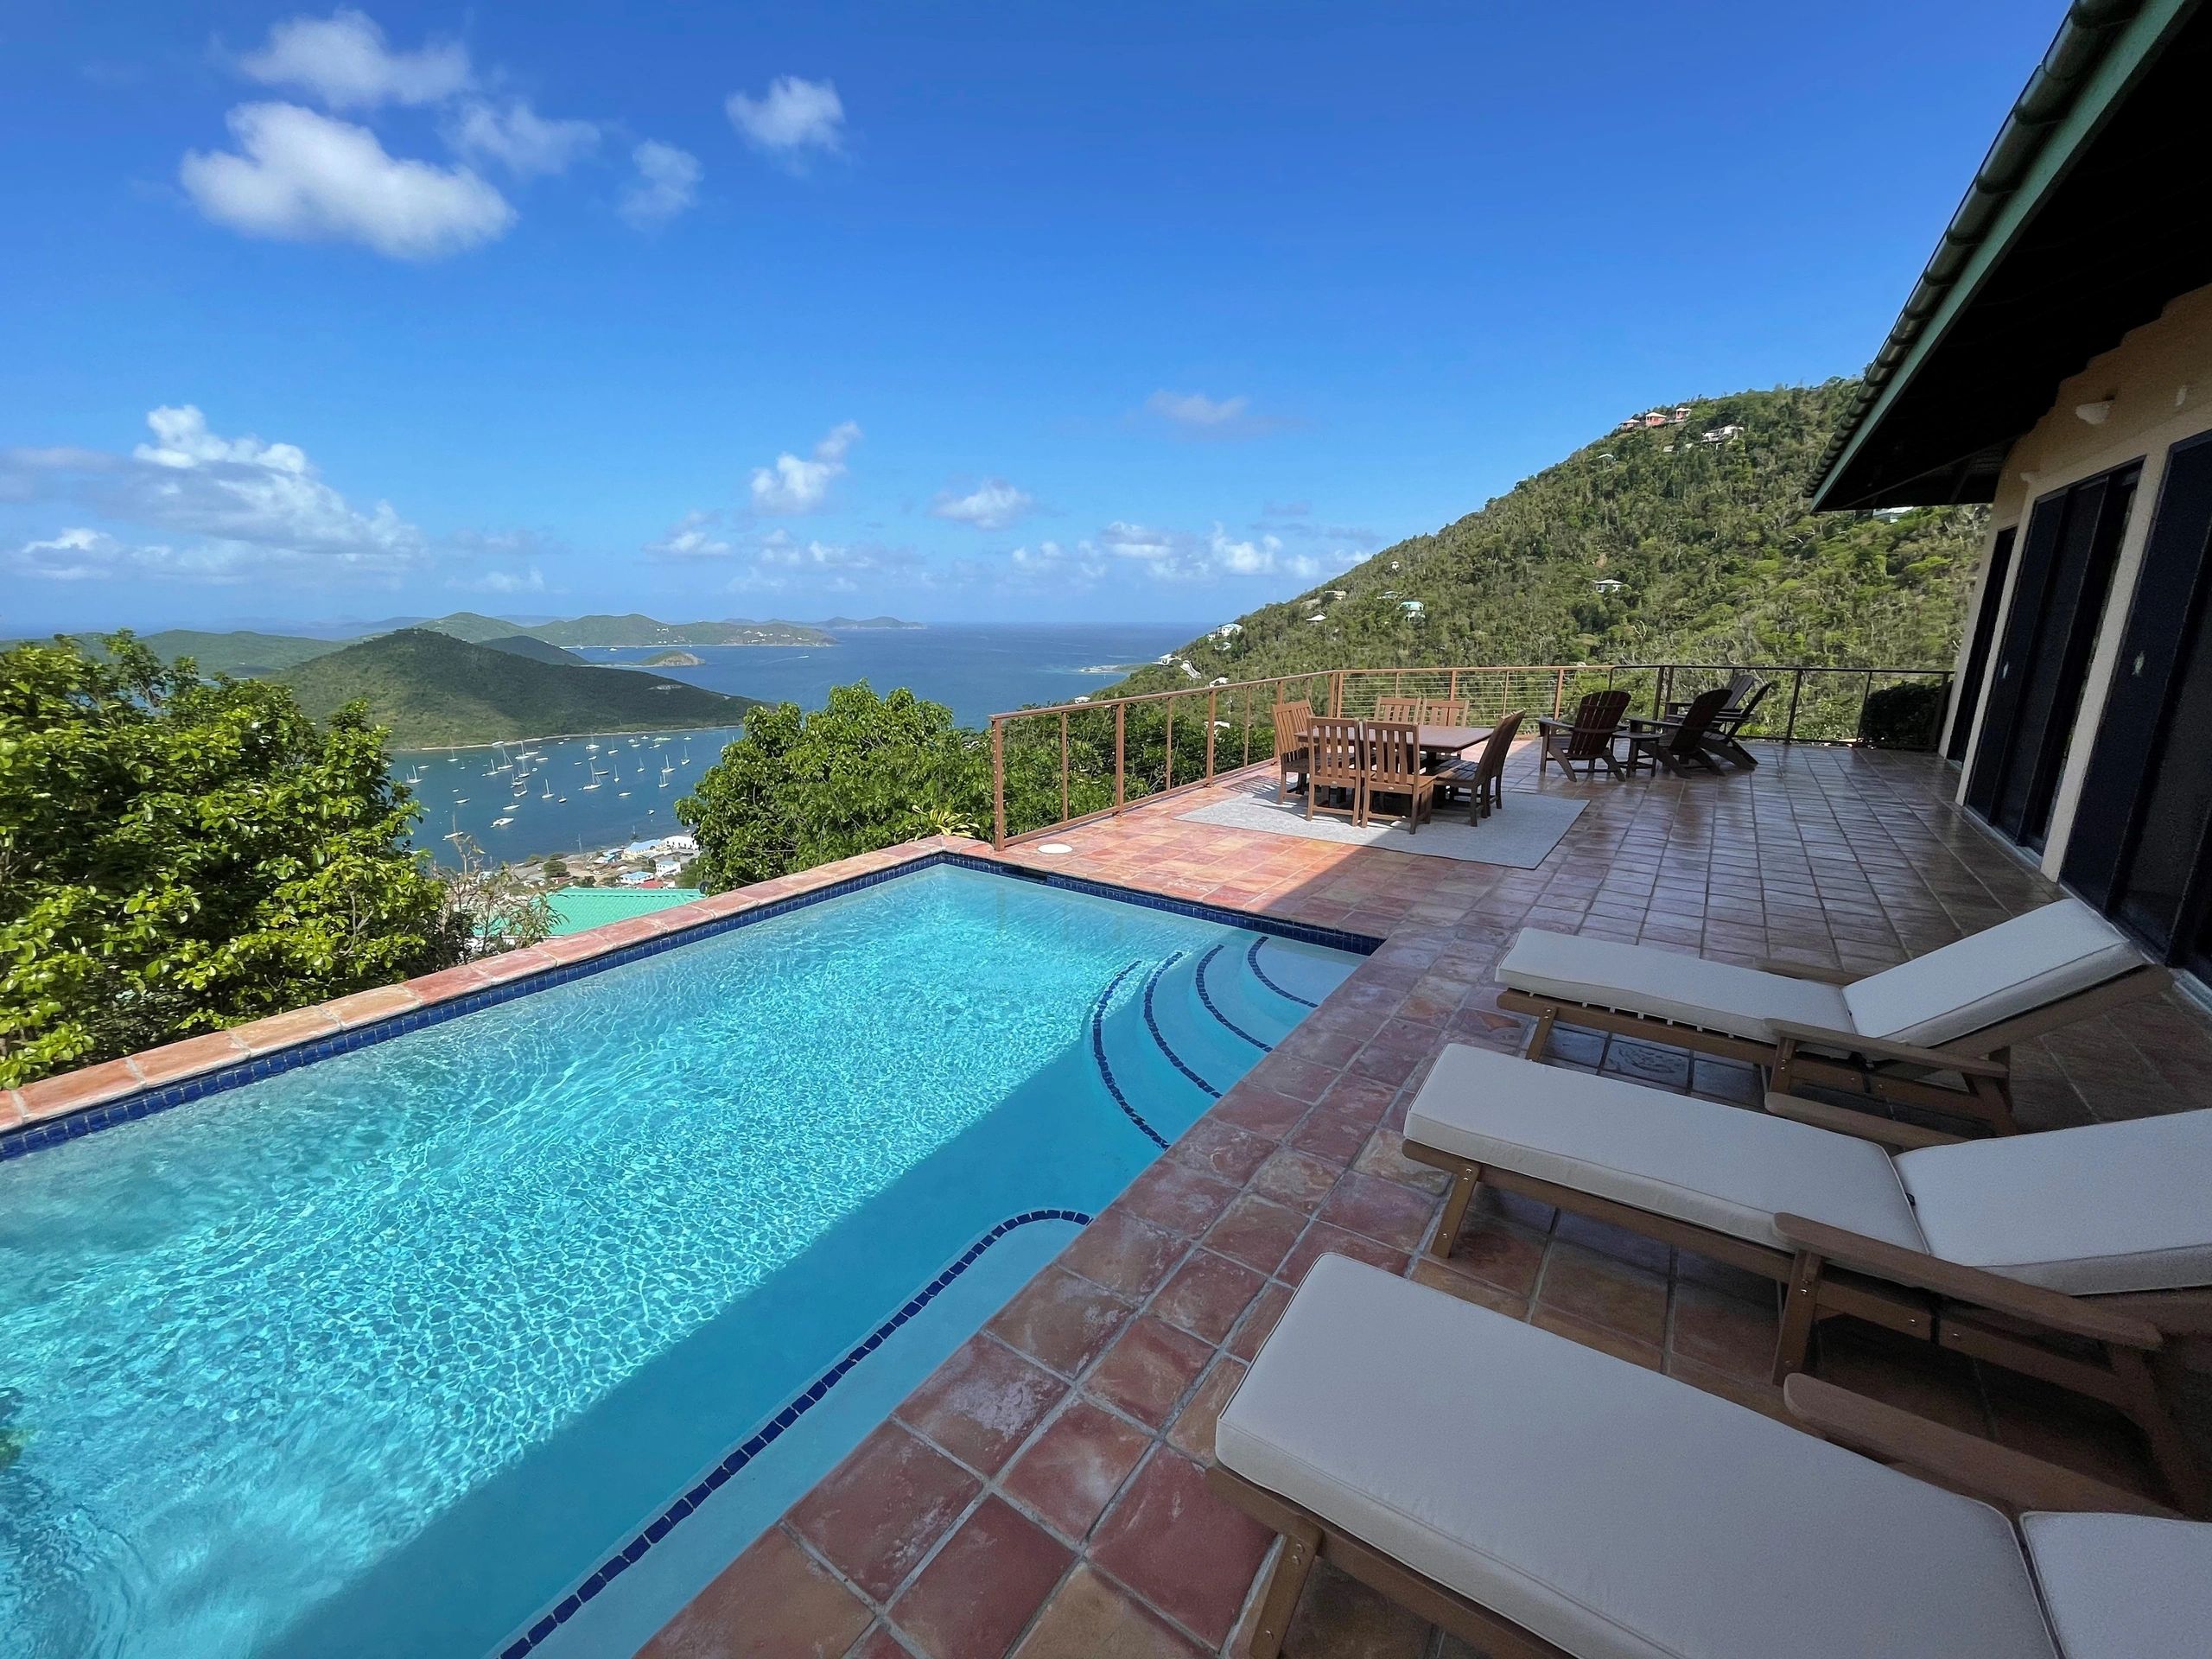 View from Casa YaYa villa rental pool deck in St. John USVI.